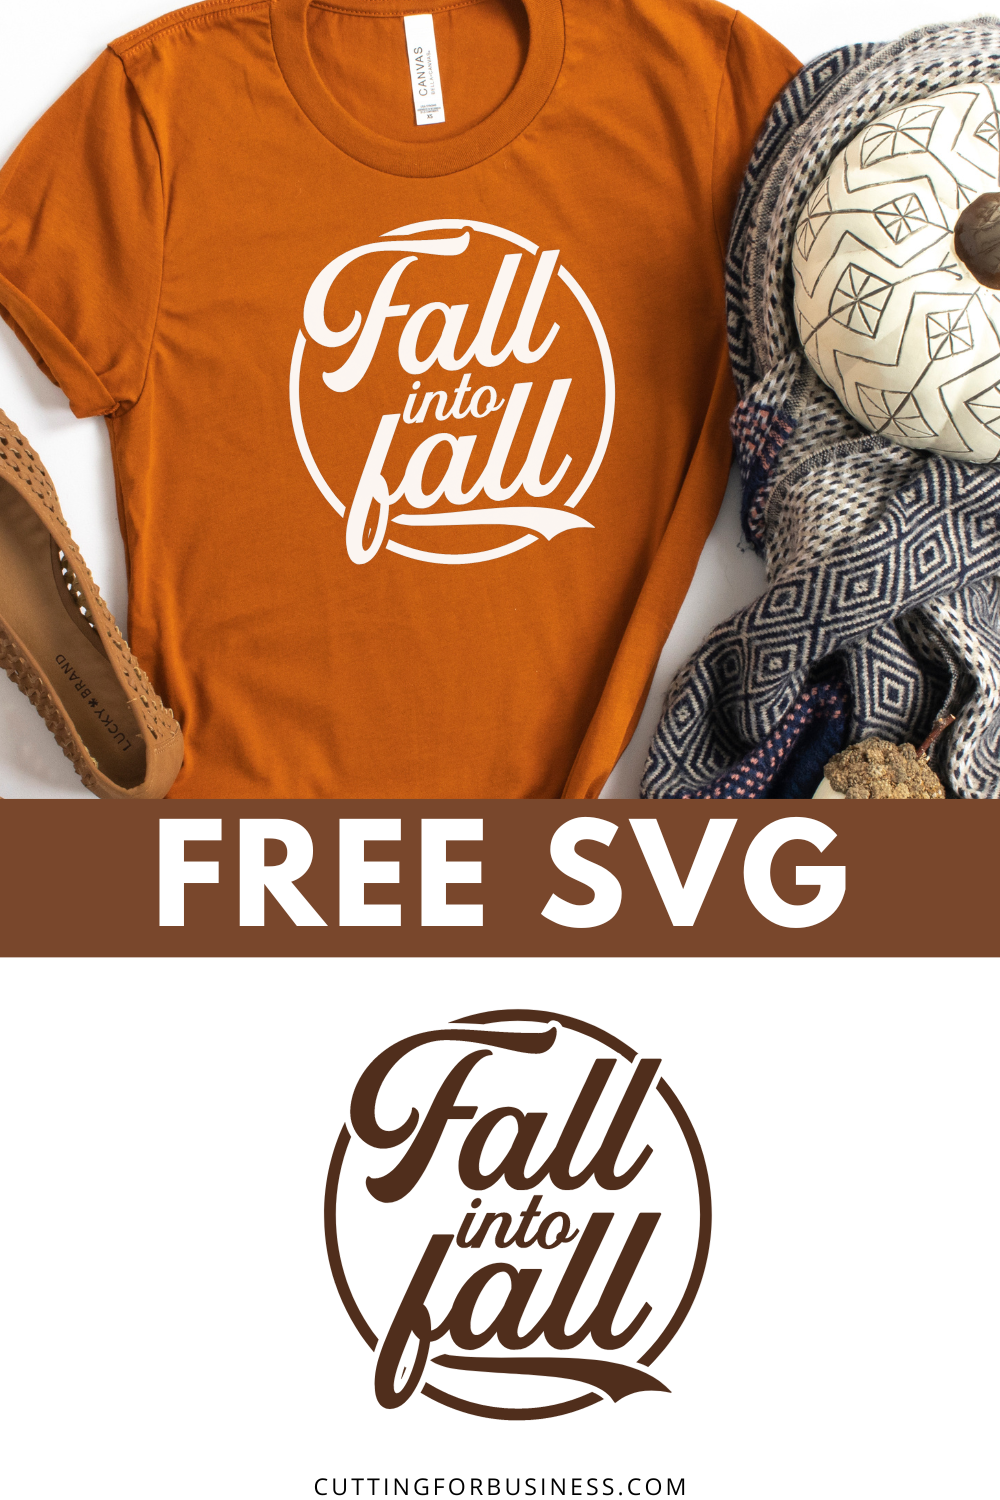 Free Fall into Fall SVG Cut File - cuttingforbusiness.com